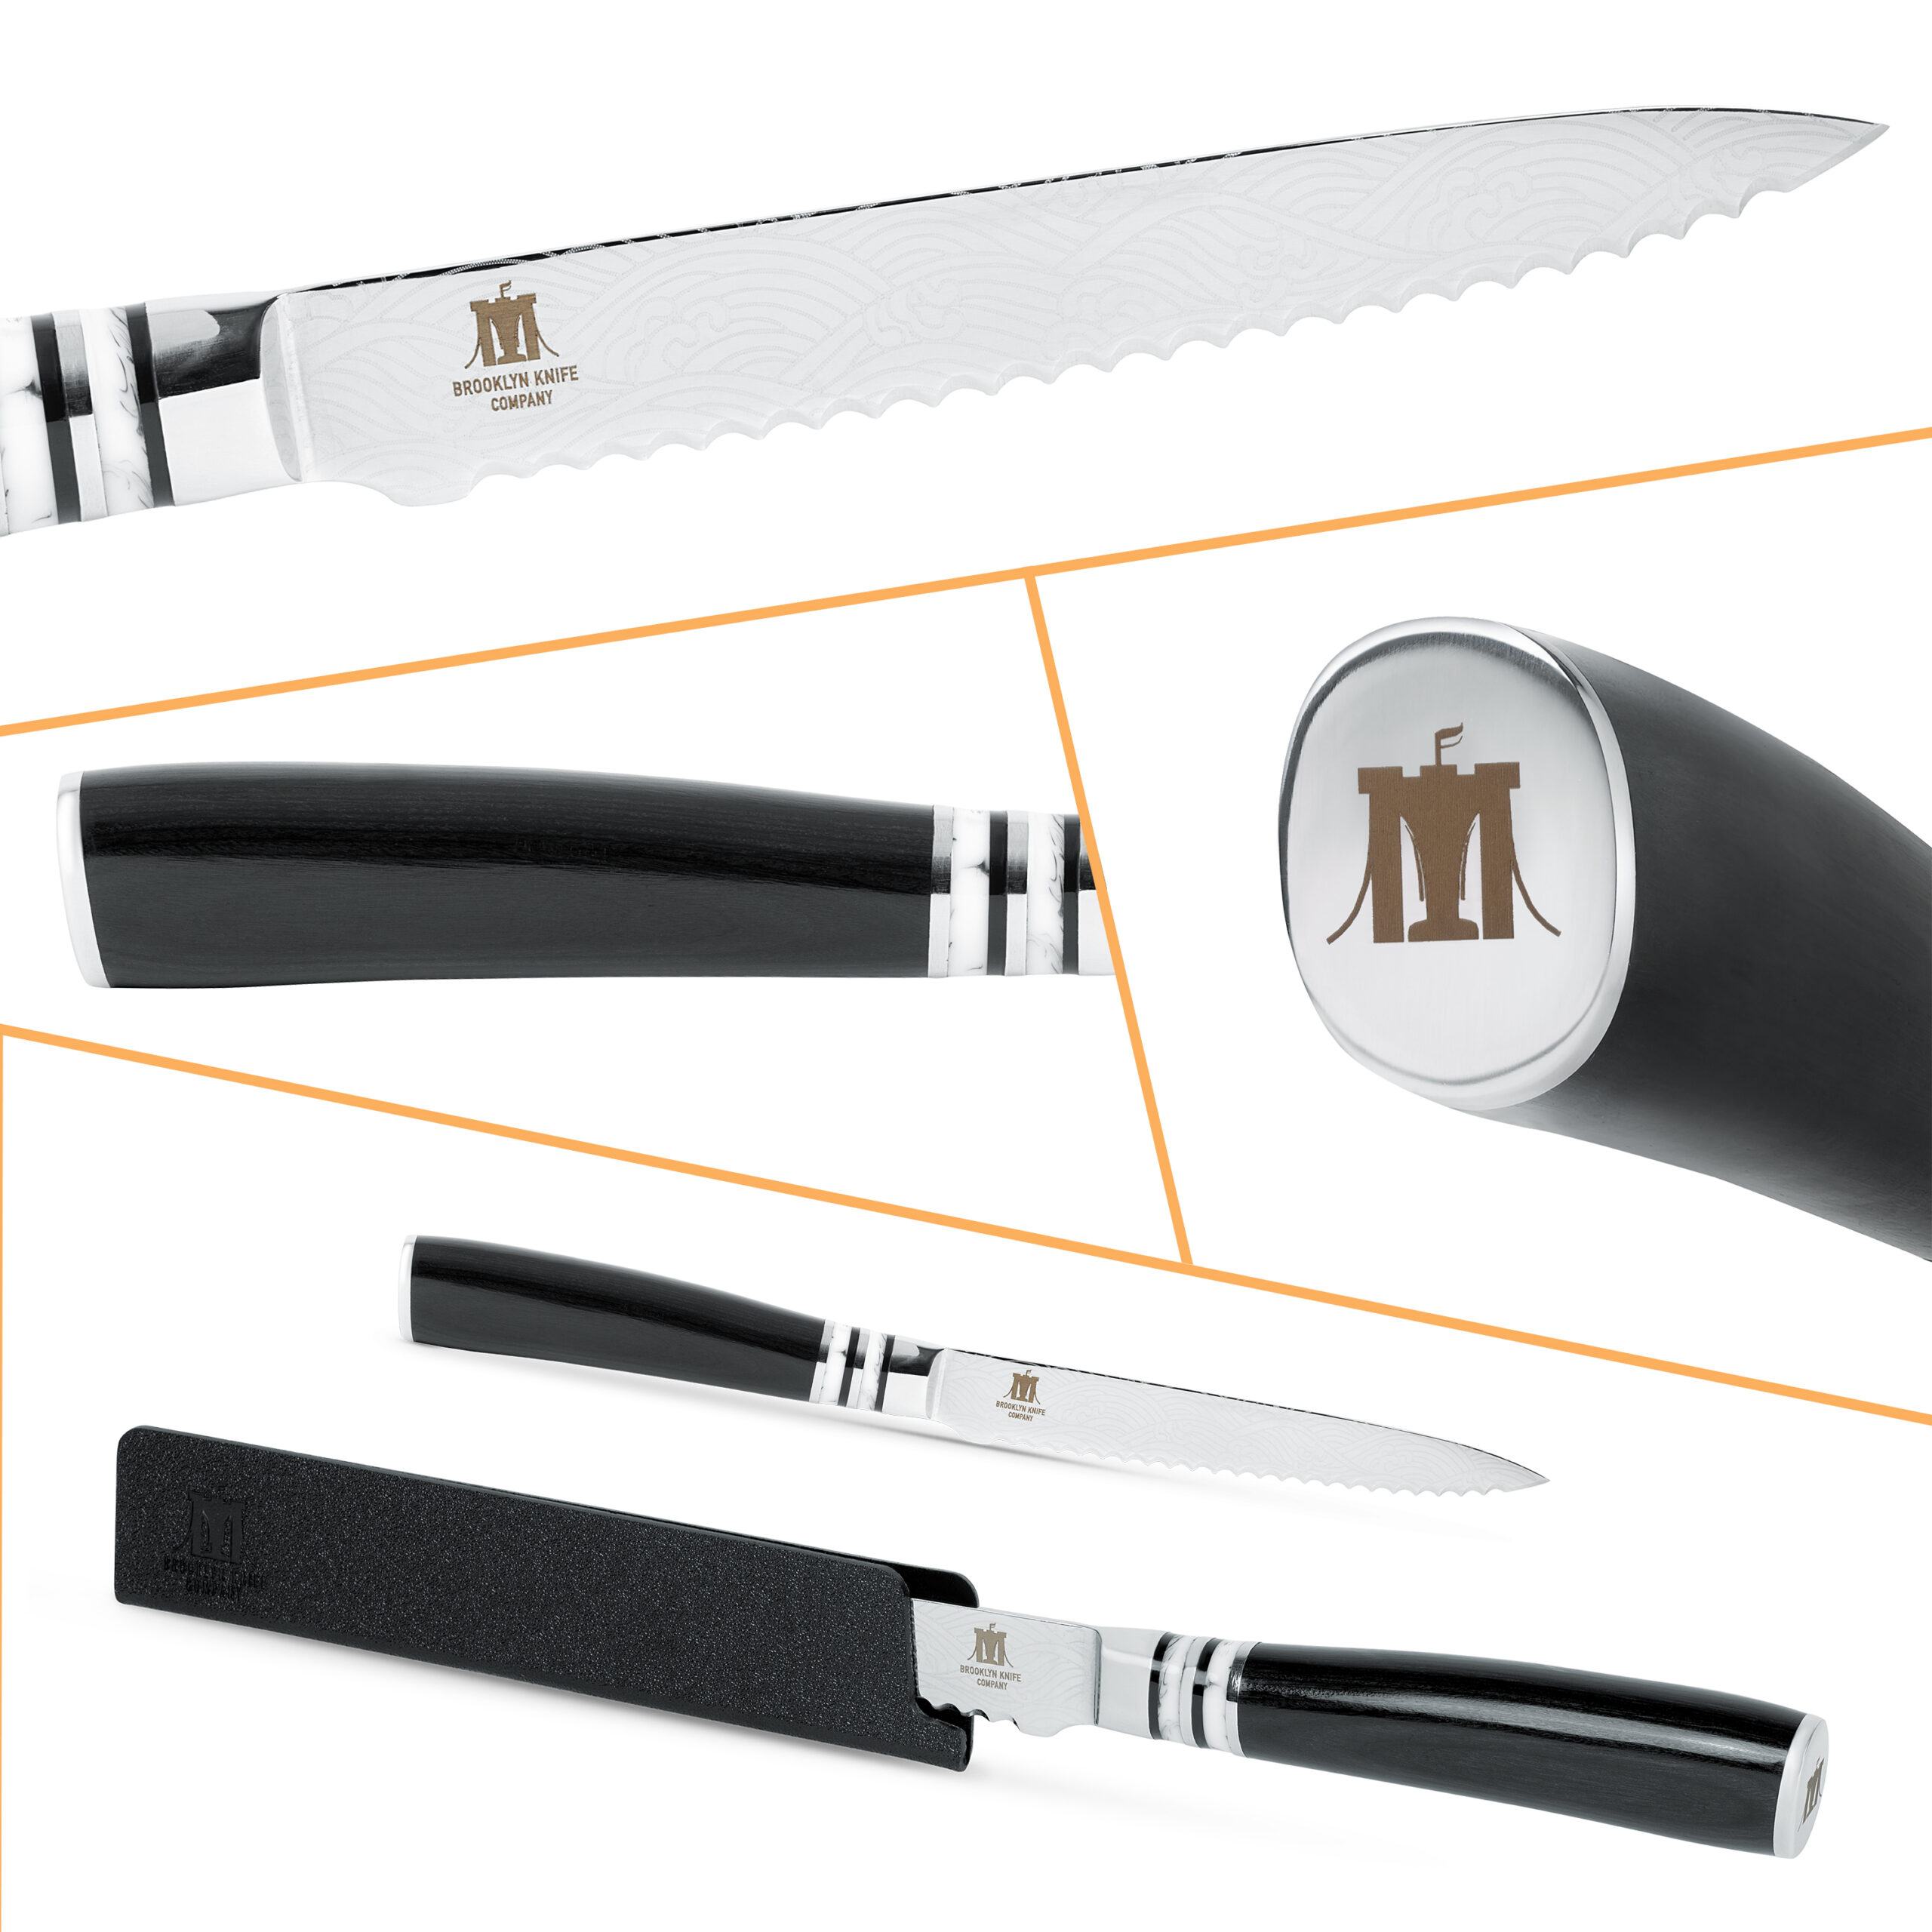 Japanese Kitchen Utility Knife 5.1 inch Household Use Serrated Blade Seki Japan